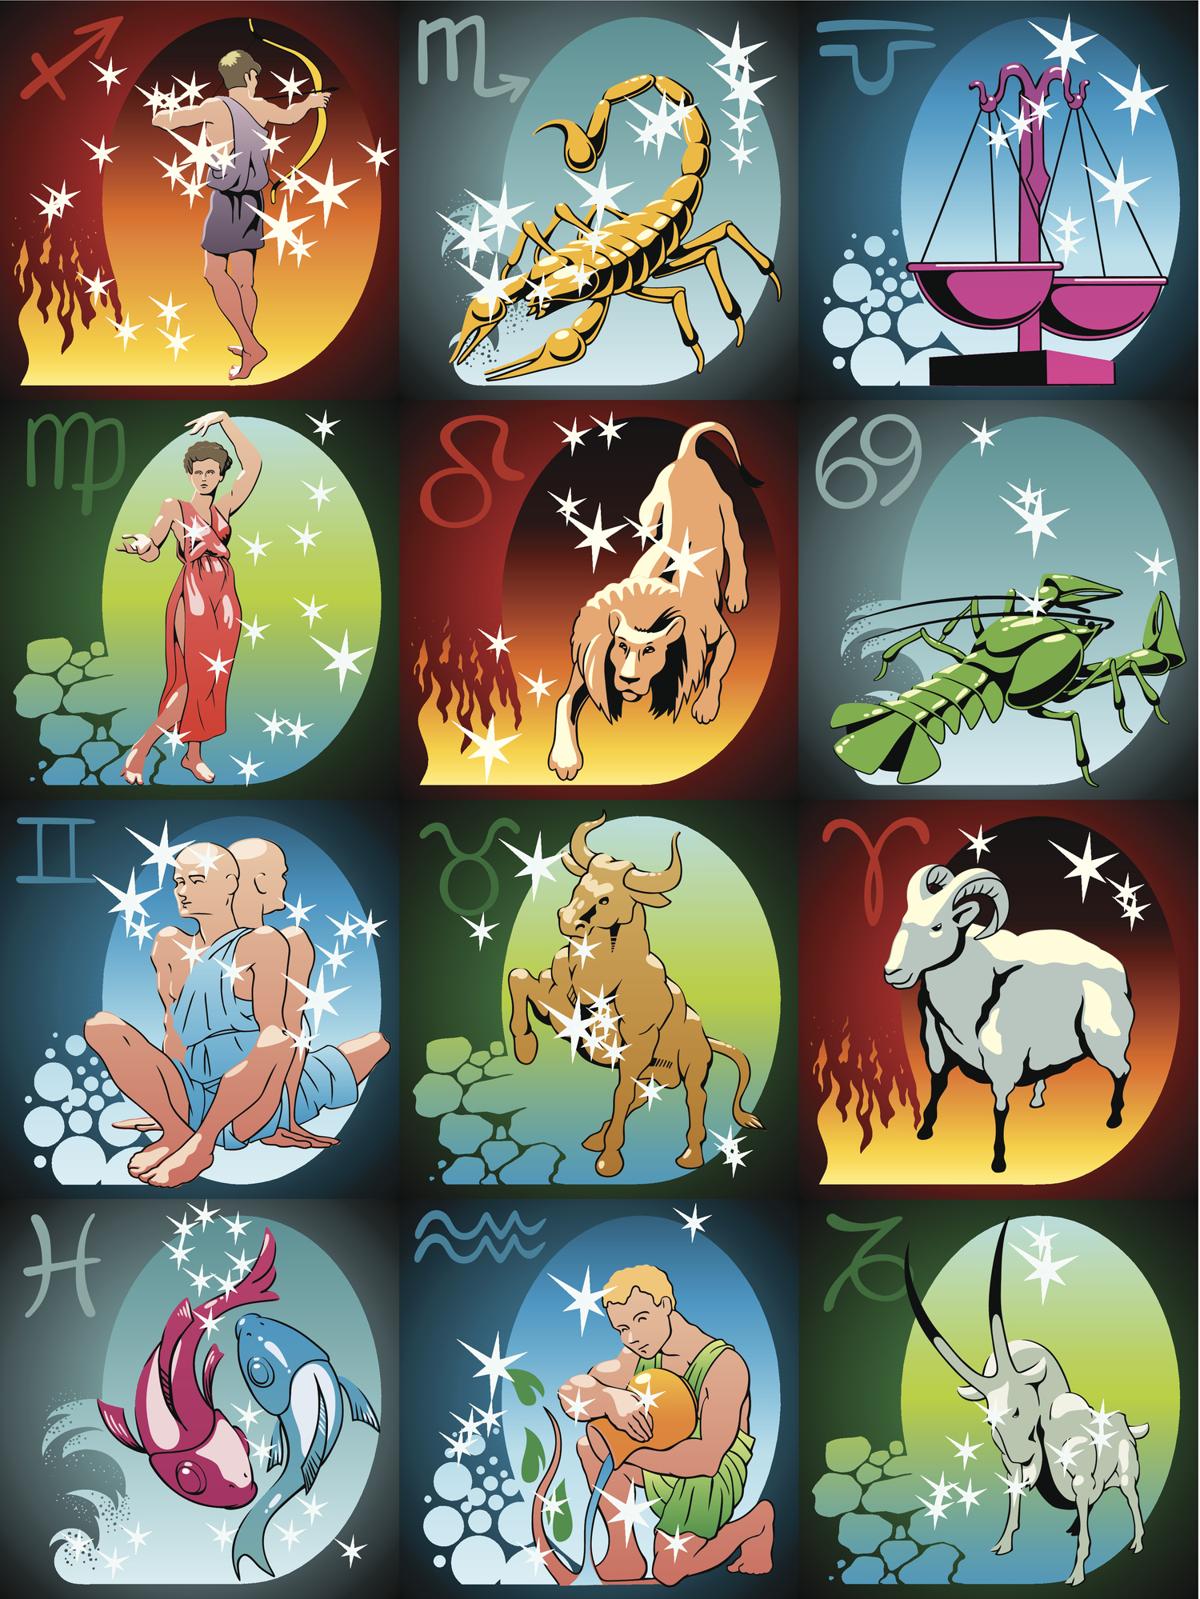 A Precise Interpretation of the Zodiac Signs and Symbols - Astrology Bay